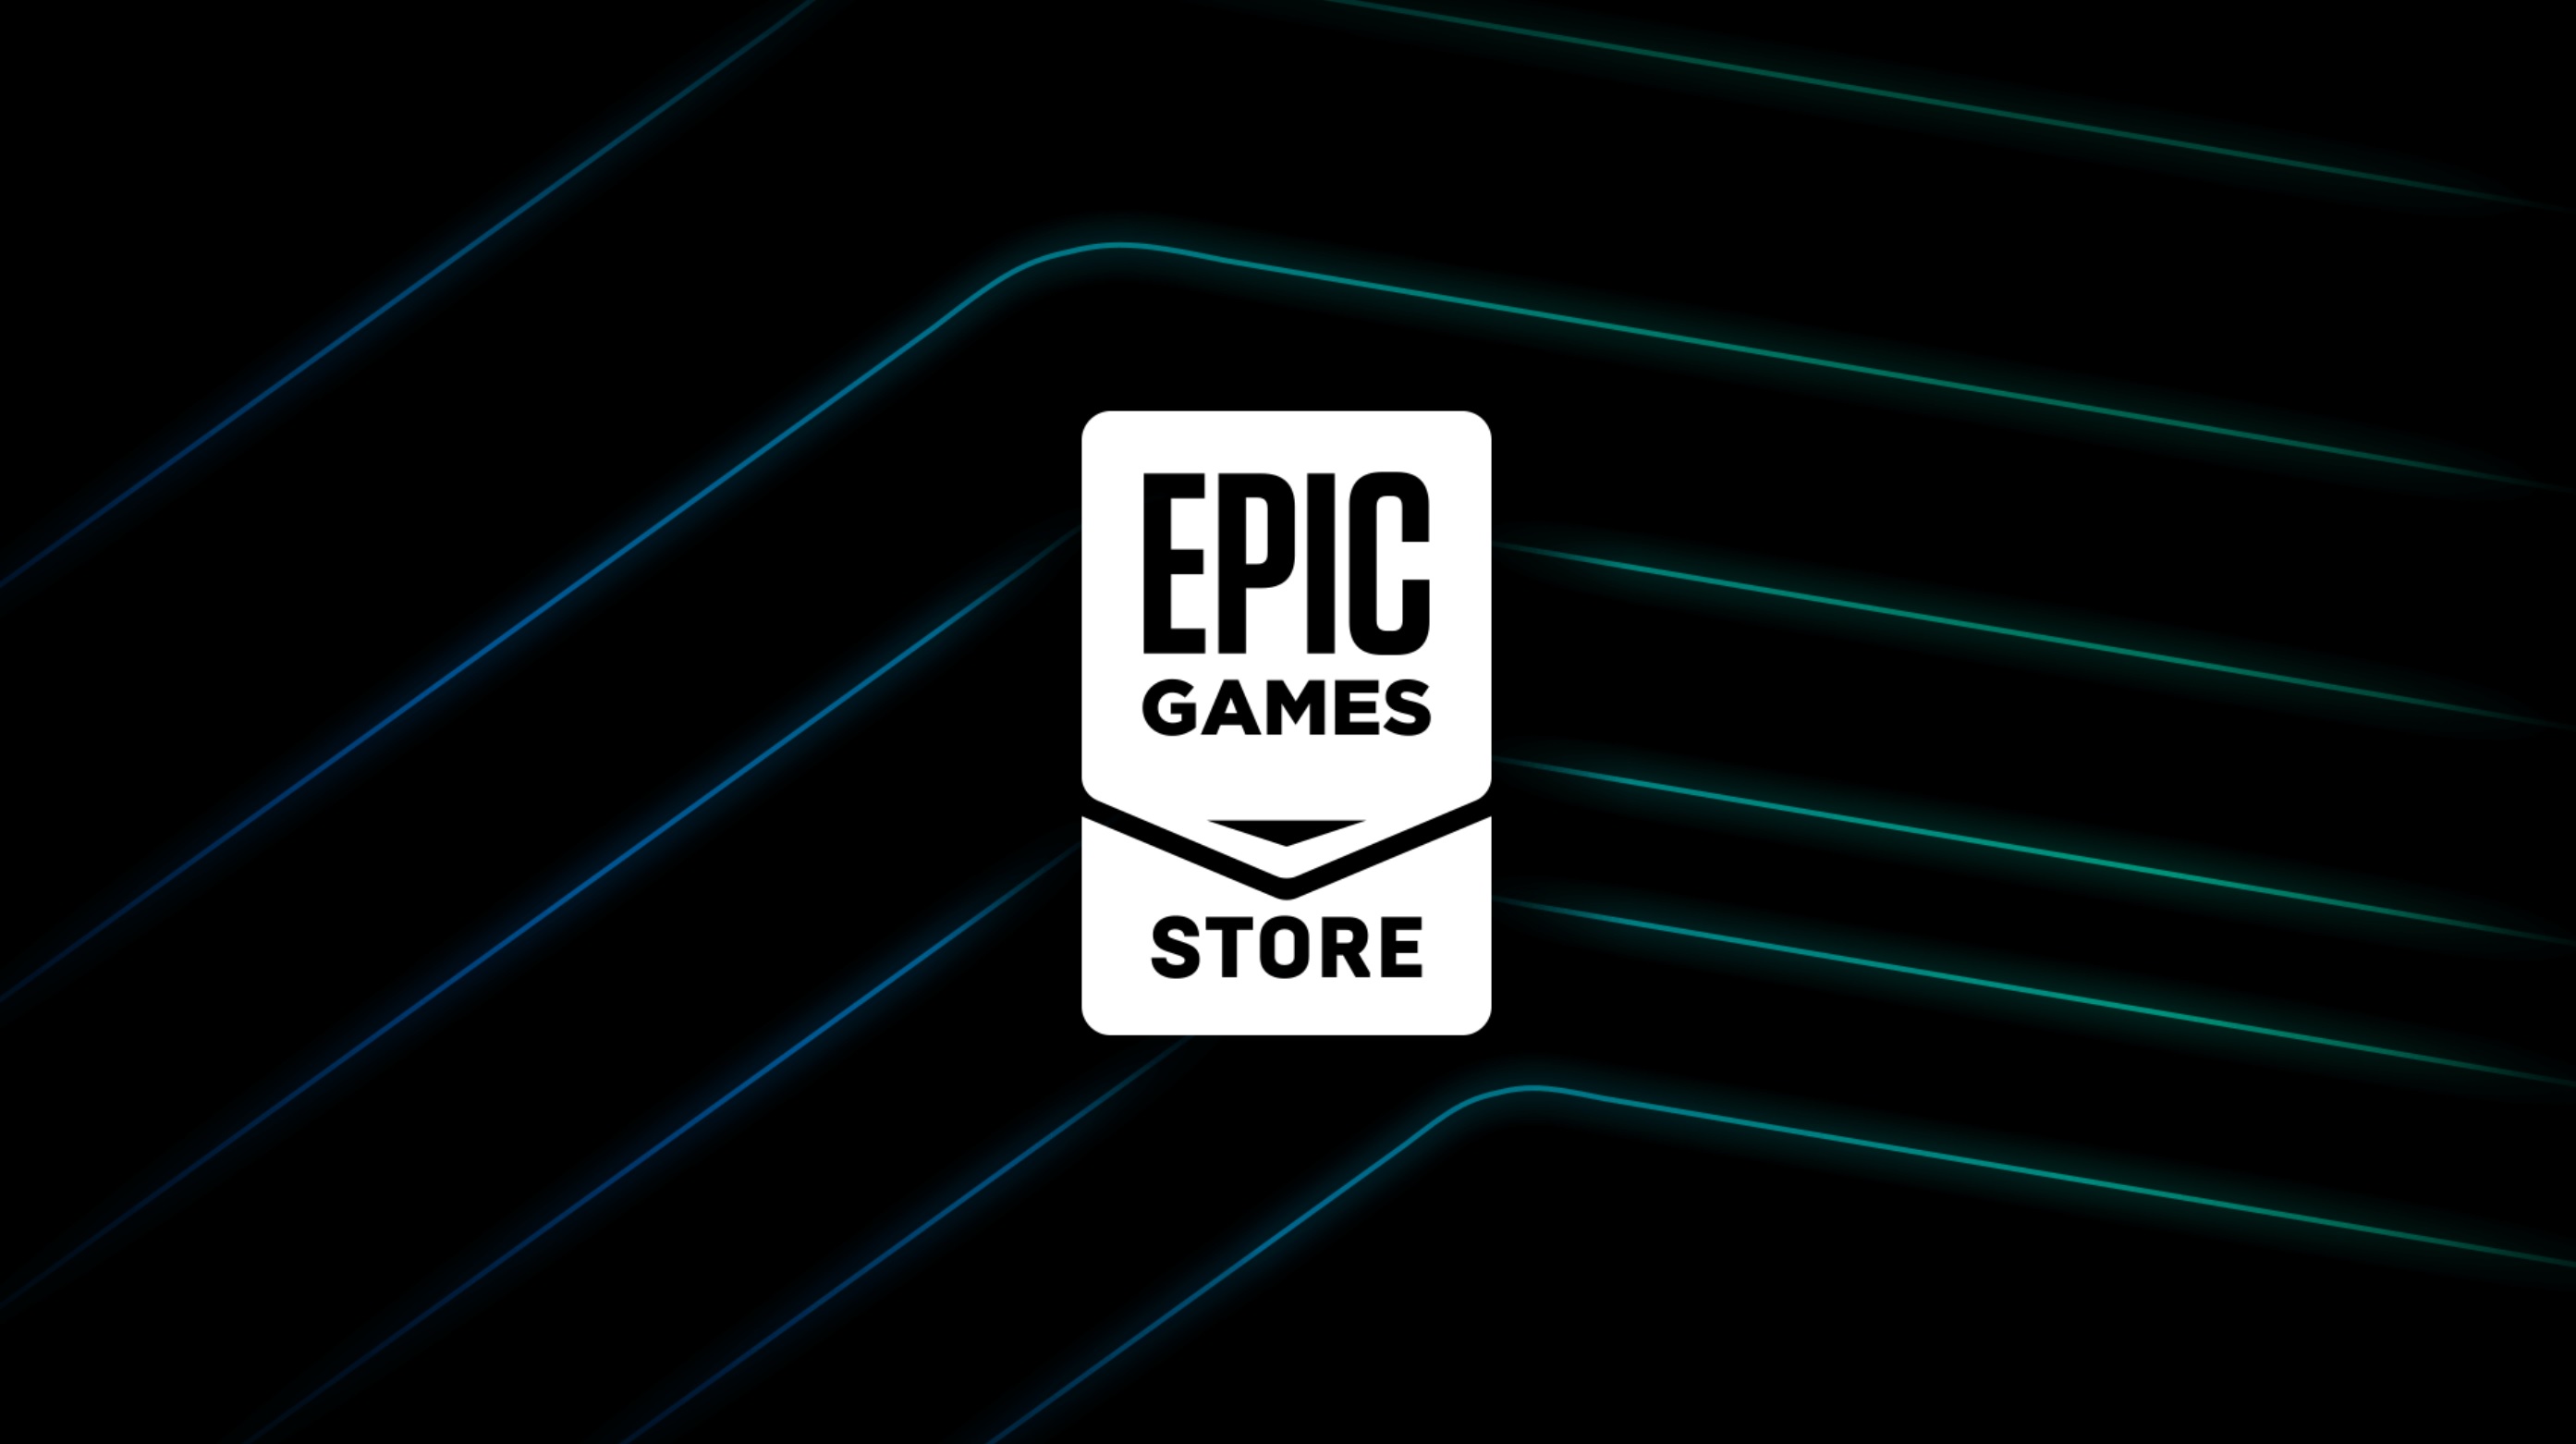 Epic games цены. ЭПИК гейм. Магазин Epic games. Epic games logo. Картинка ЭПИК геймс.